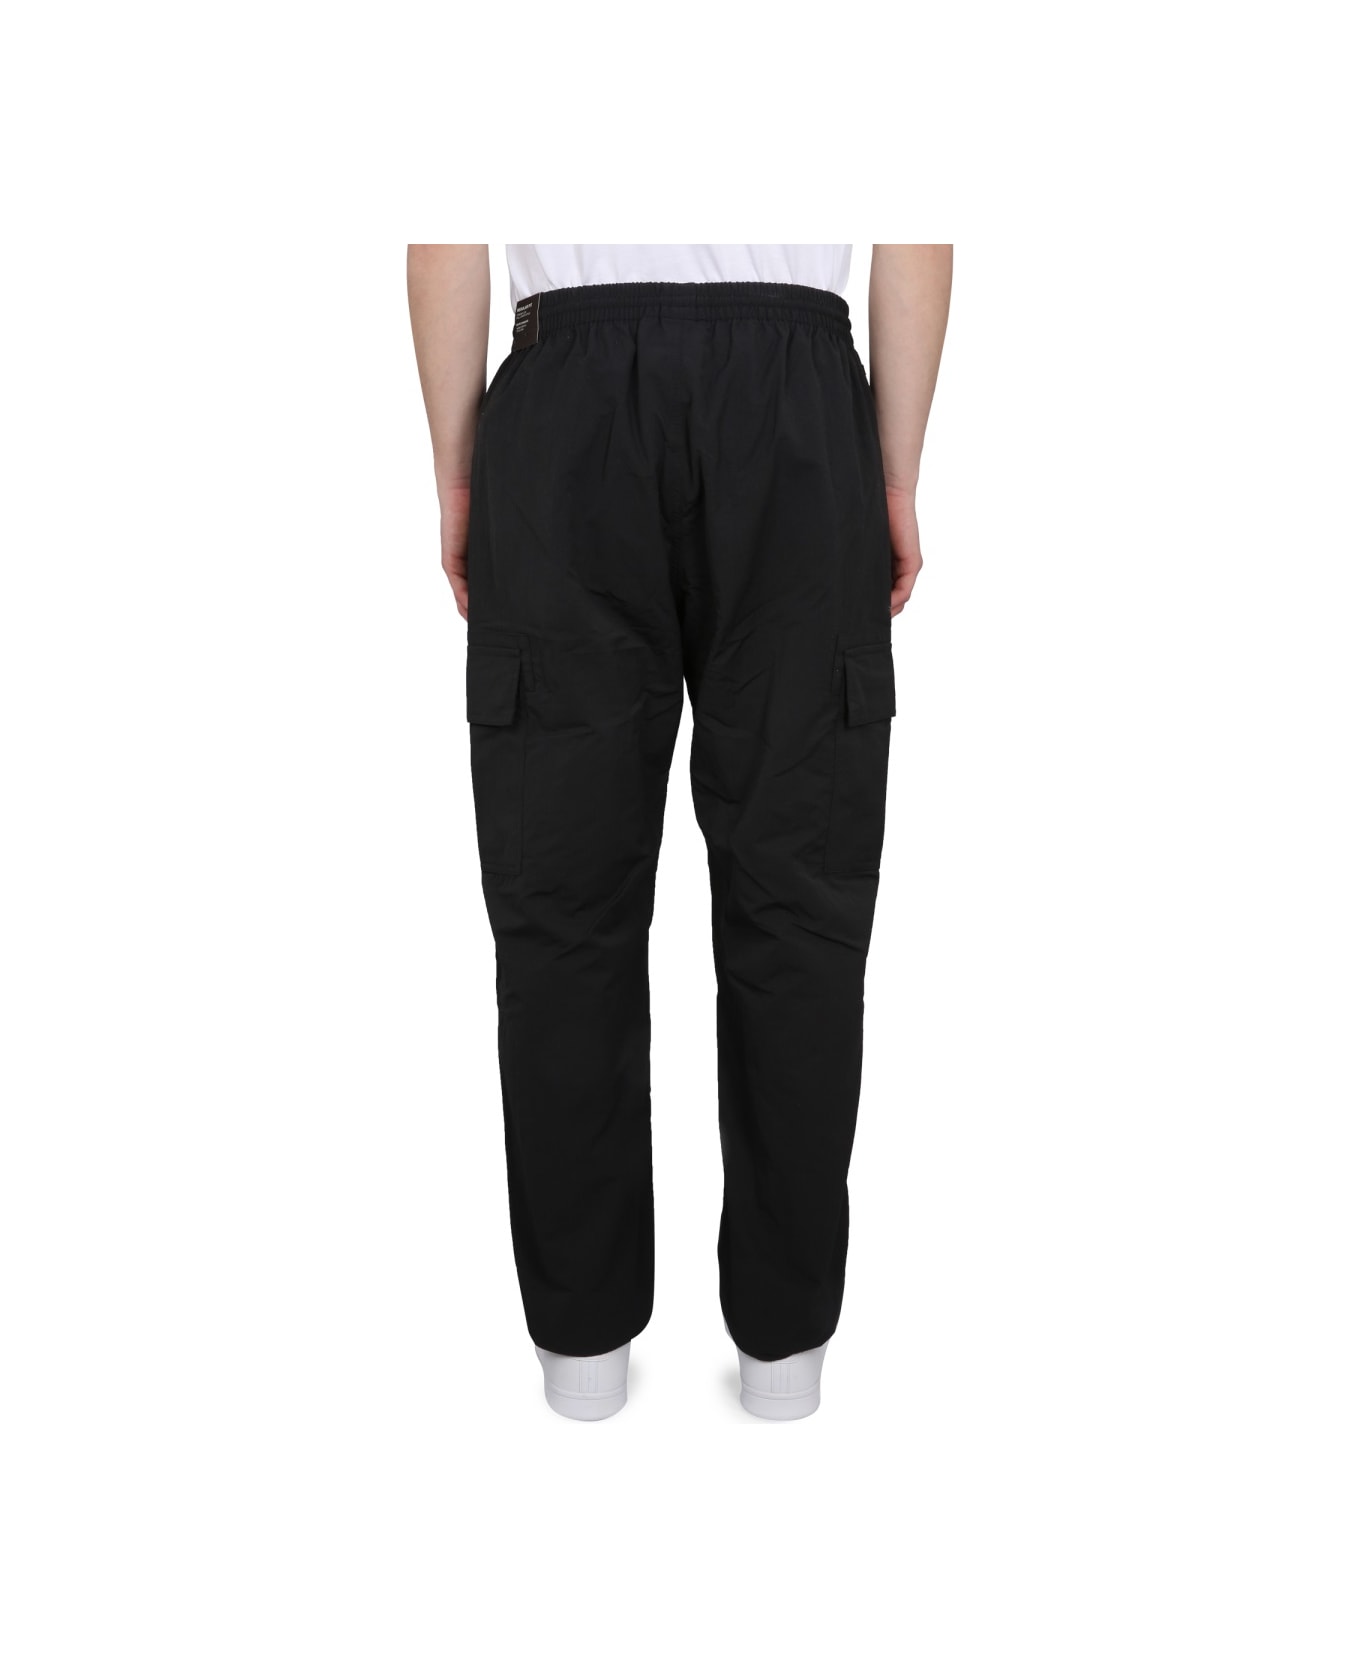 Adidas Originals Cargo Pants - BLACK